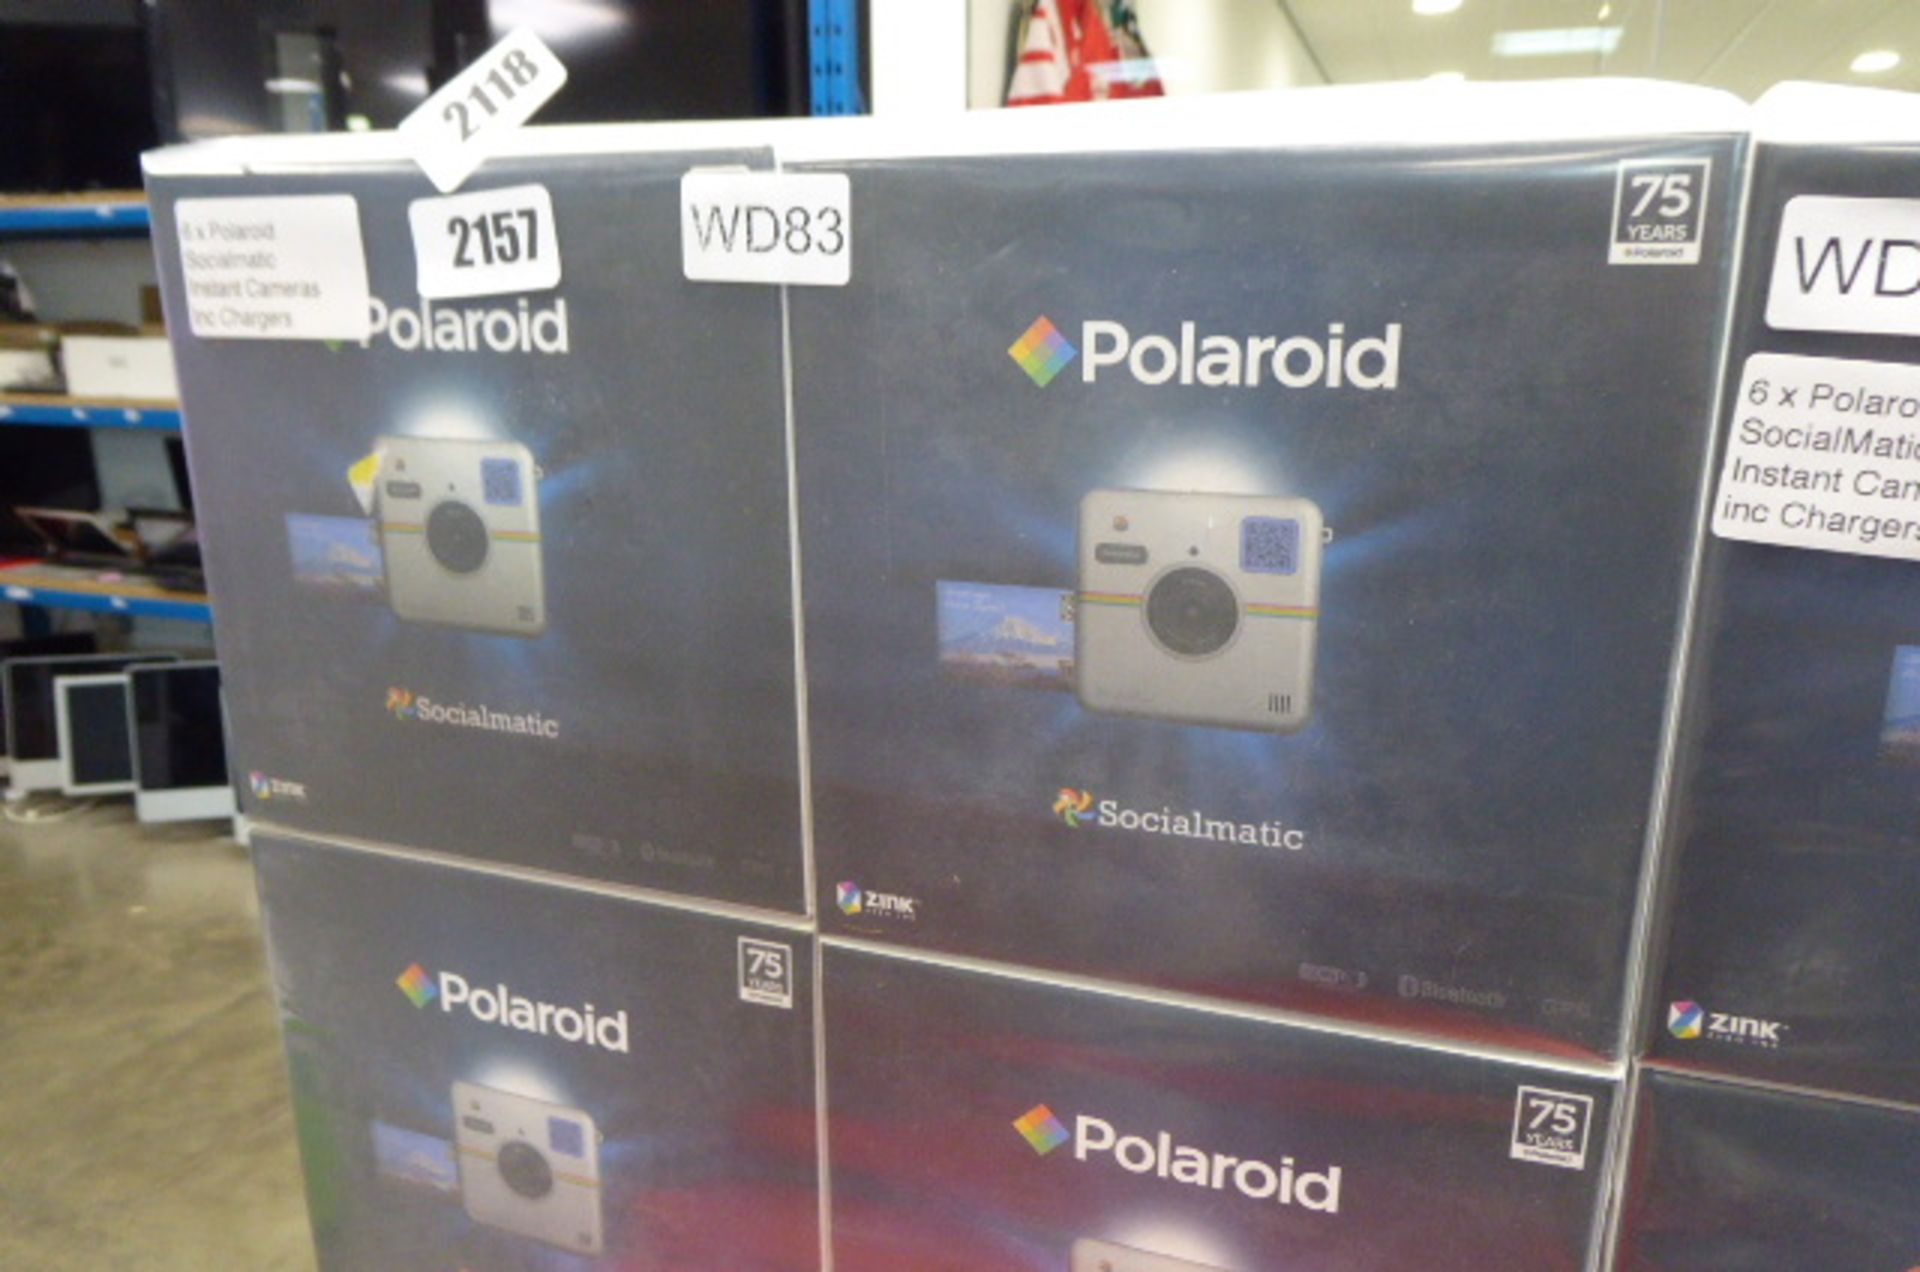 2157 6 Polaroid Sociamatic instant cameras in bag